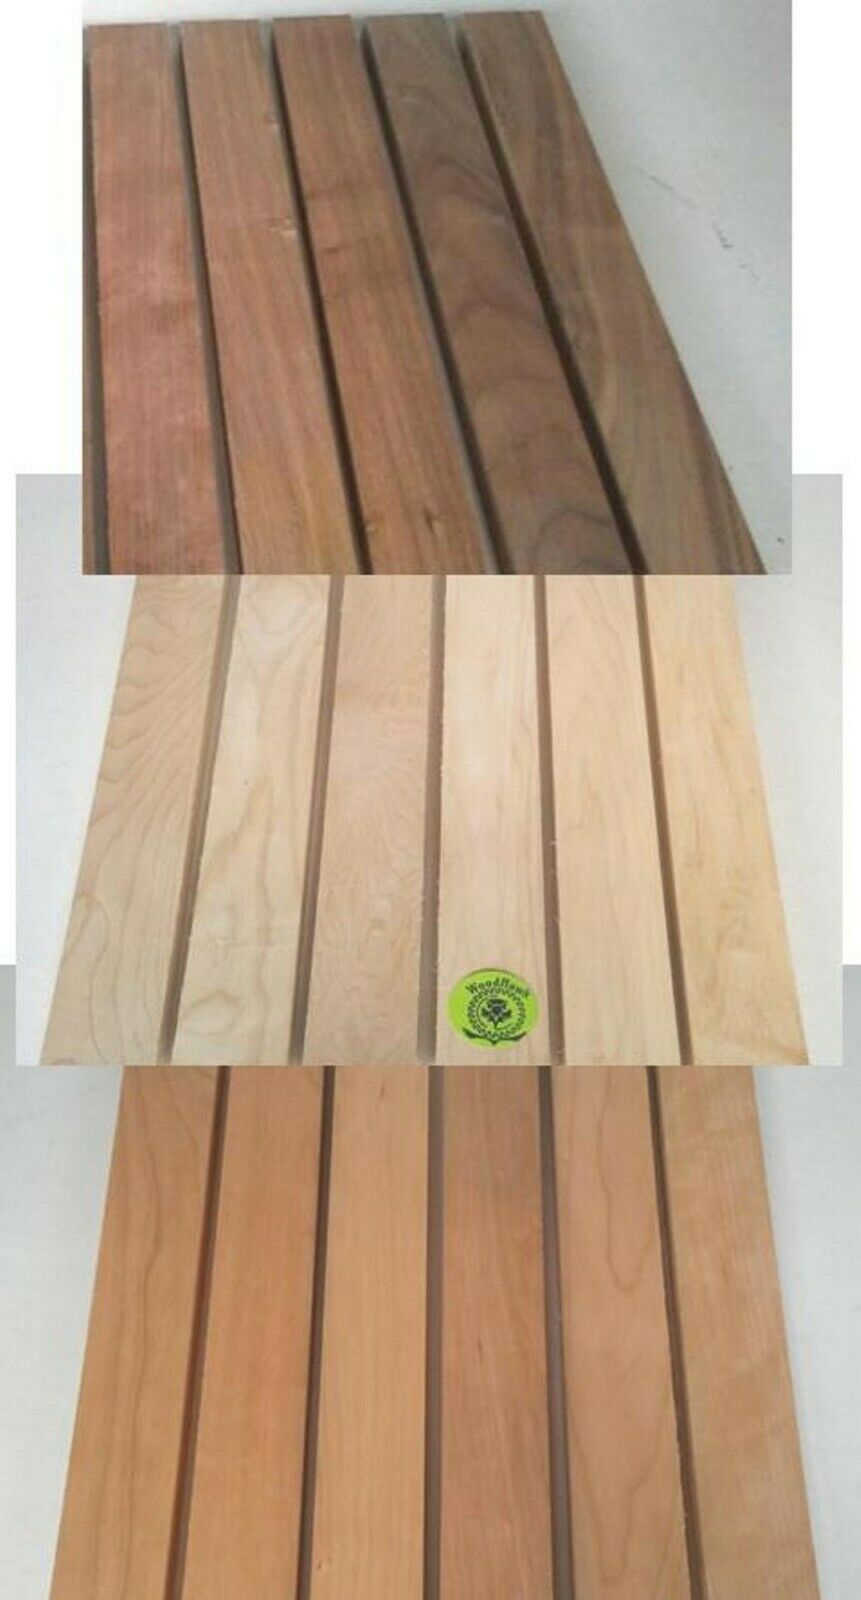 3/4" X 2" X 16" - 5 Black Walnut 5 Hard Maple 5 Cherry Wood Cutting Lumbr Boards